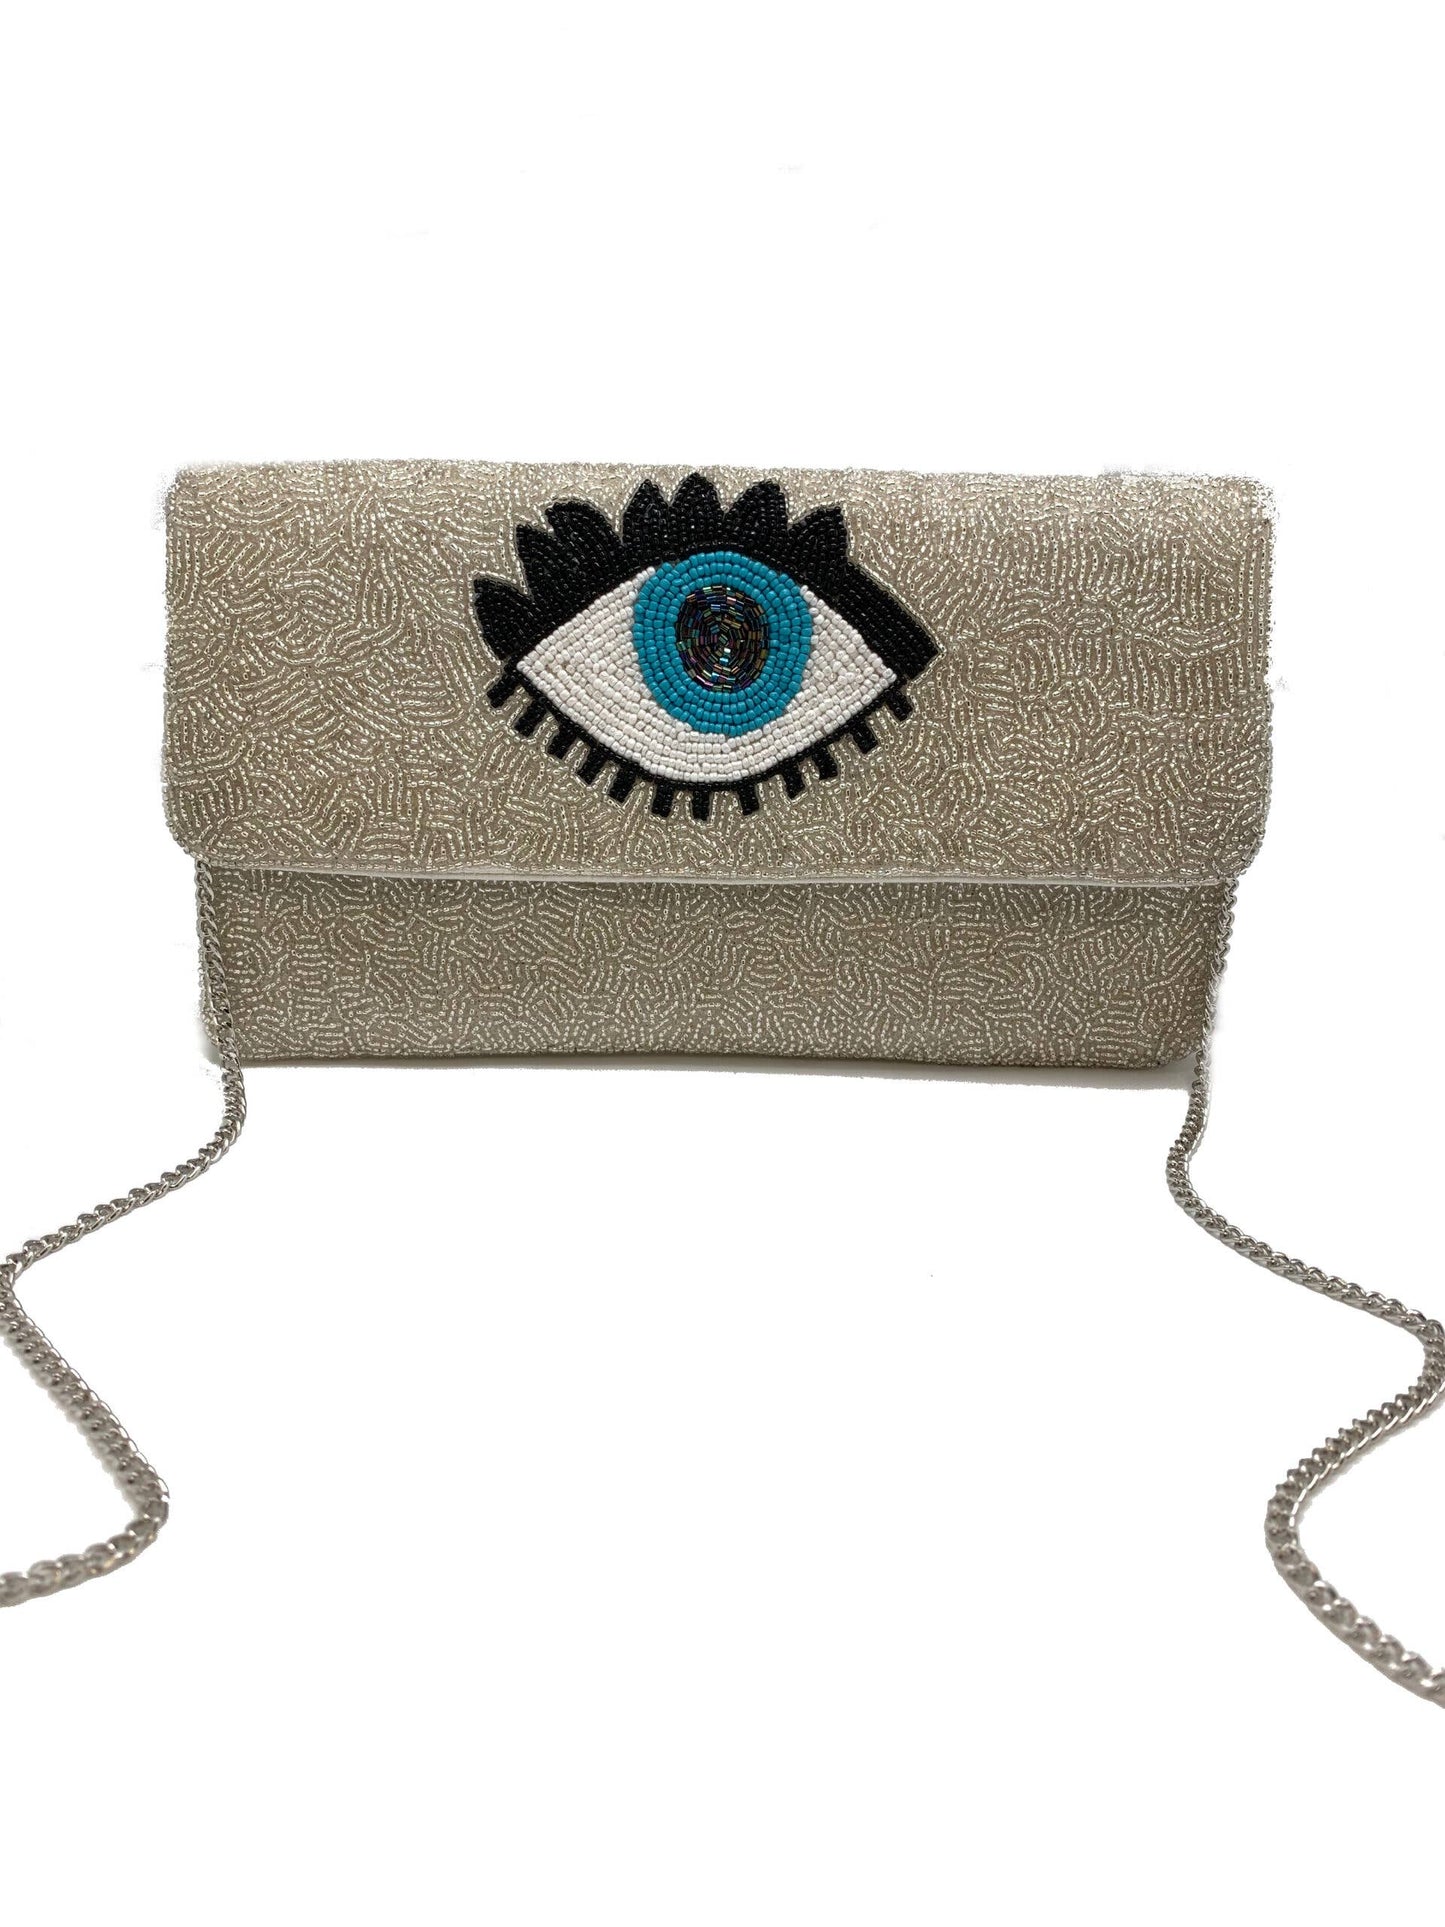 Evil Eye Beaded Clutch Bag